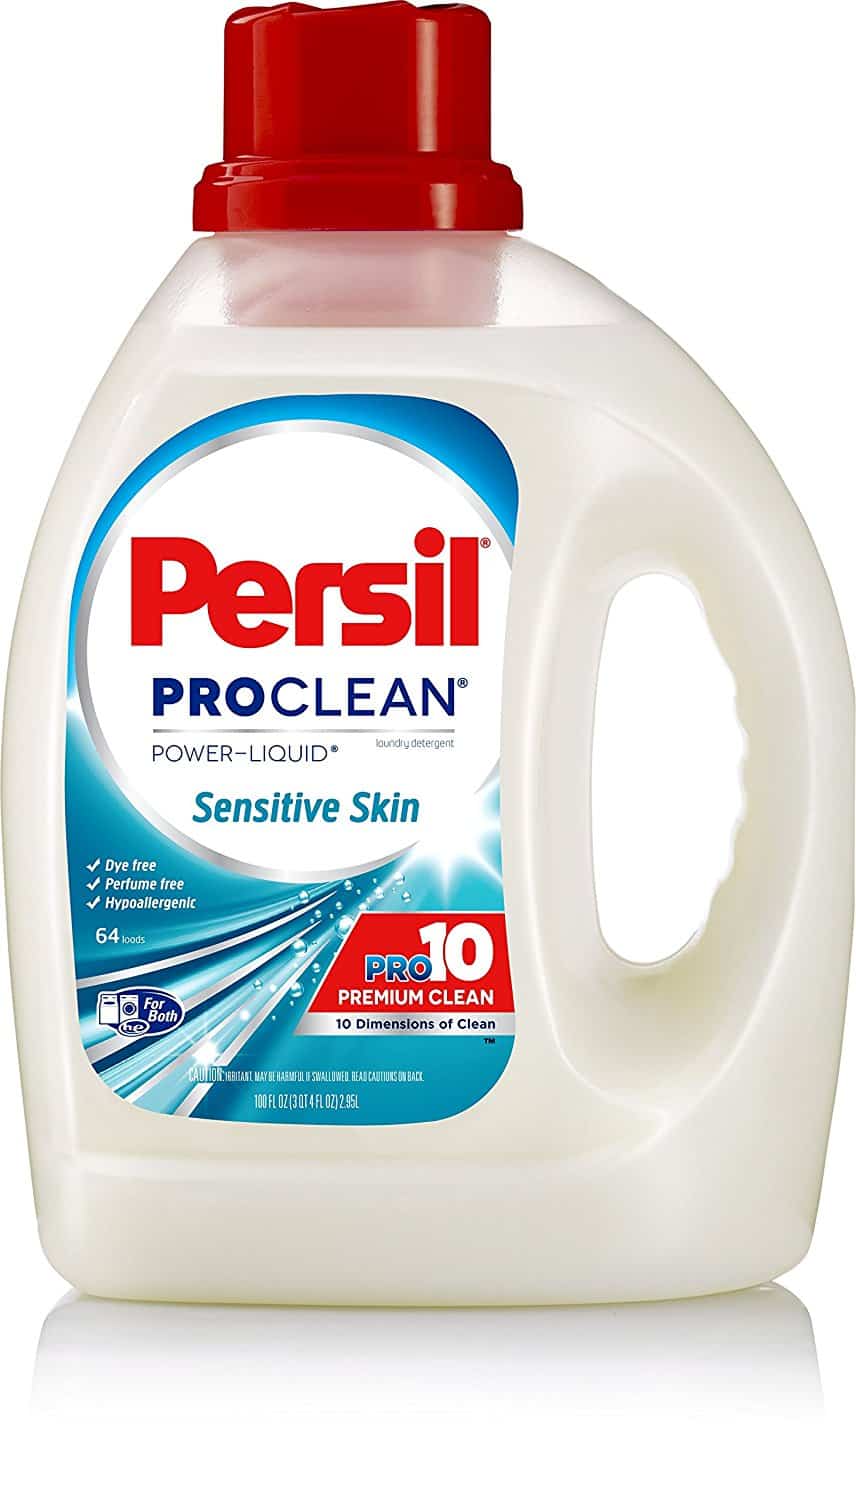 Persil Proclean power-liquid sensitive skin best cleaning supplies